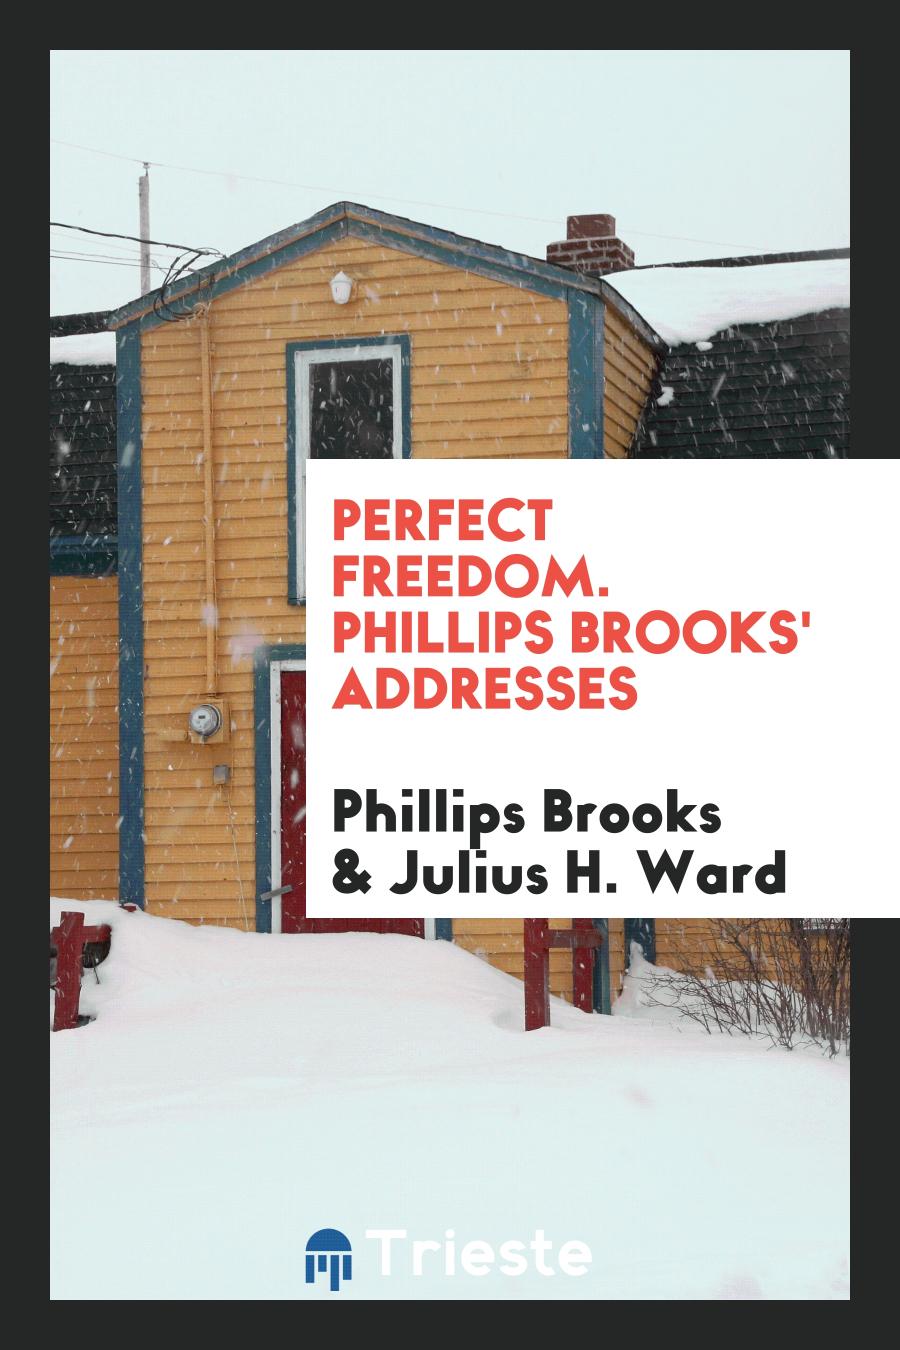 Perfect Freedom. Phillips Brooks' Addresses